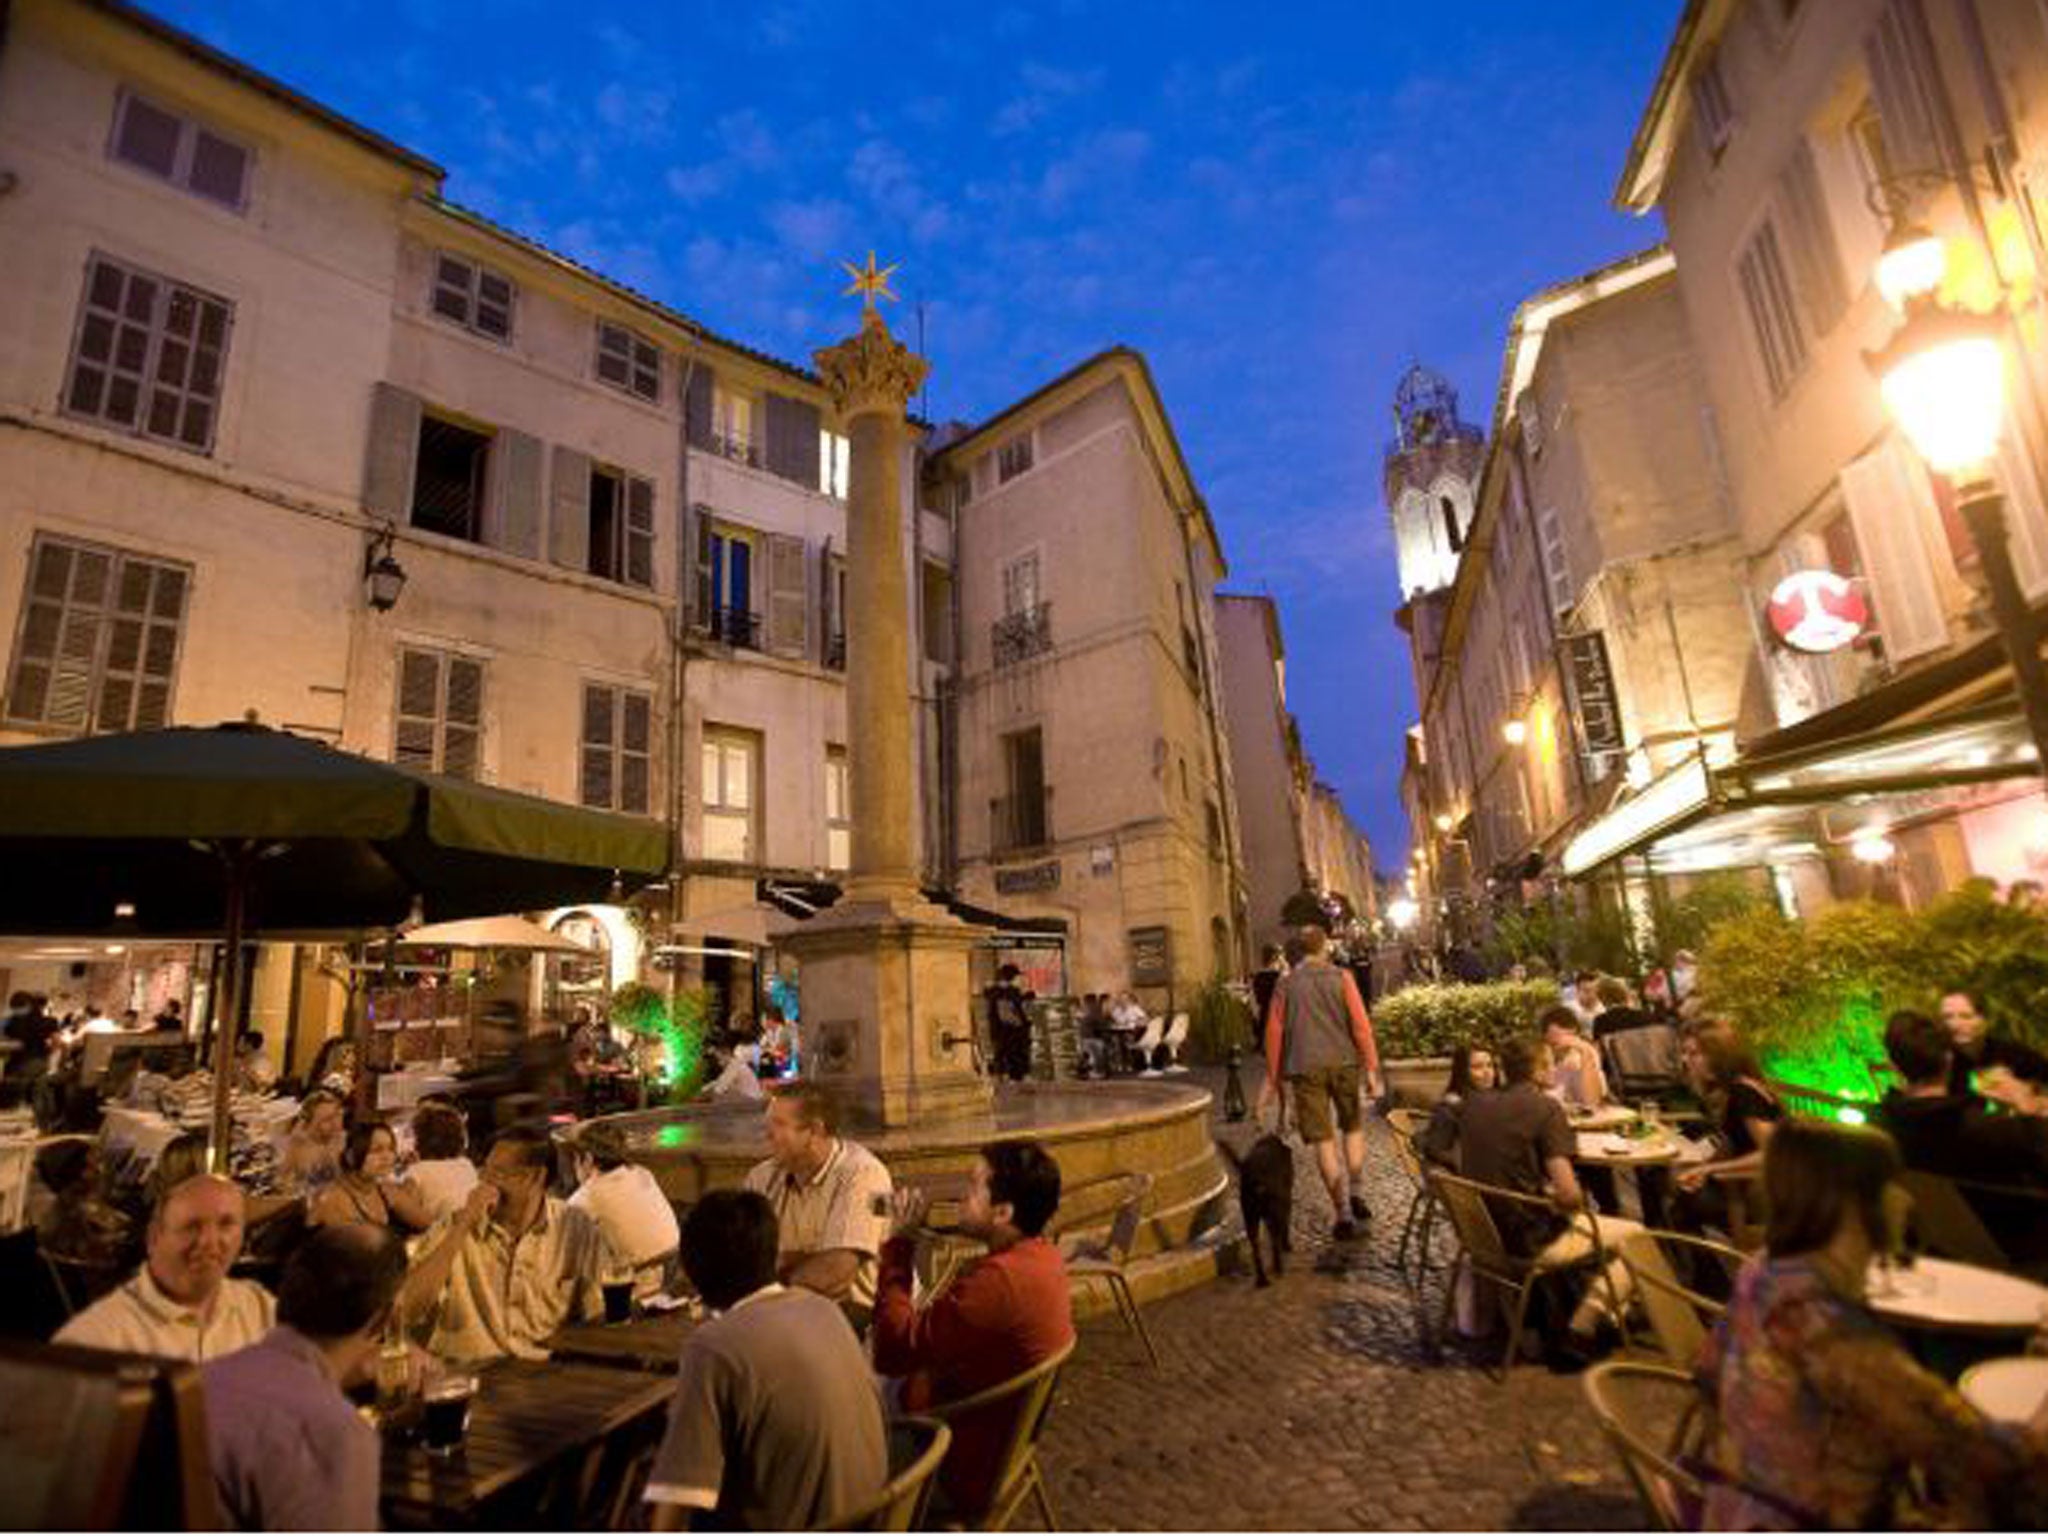 Good evening: Summer nights in Aix-en-Provence